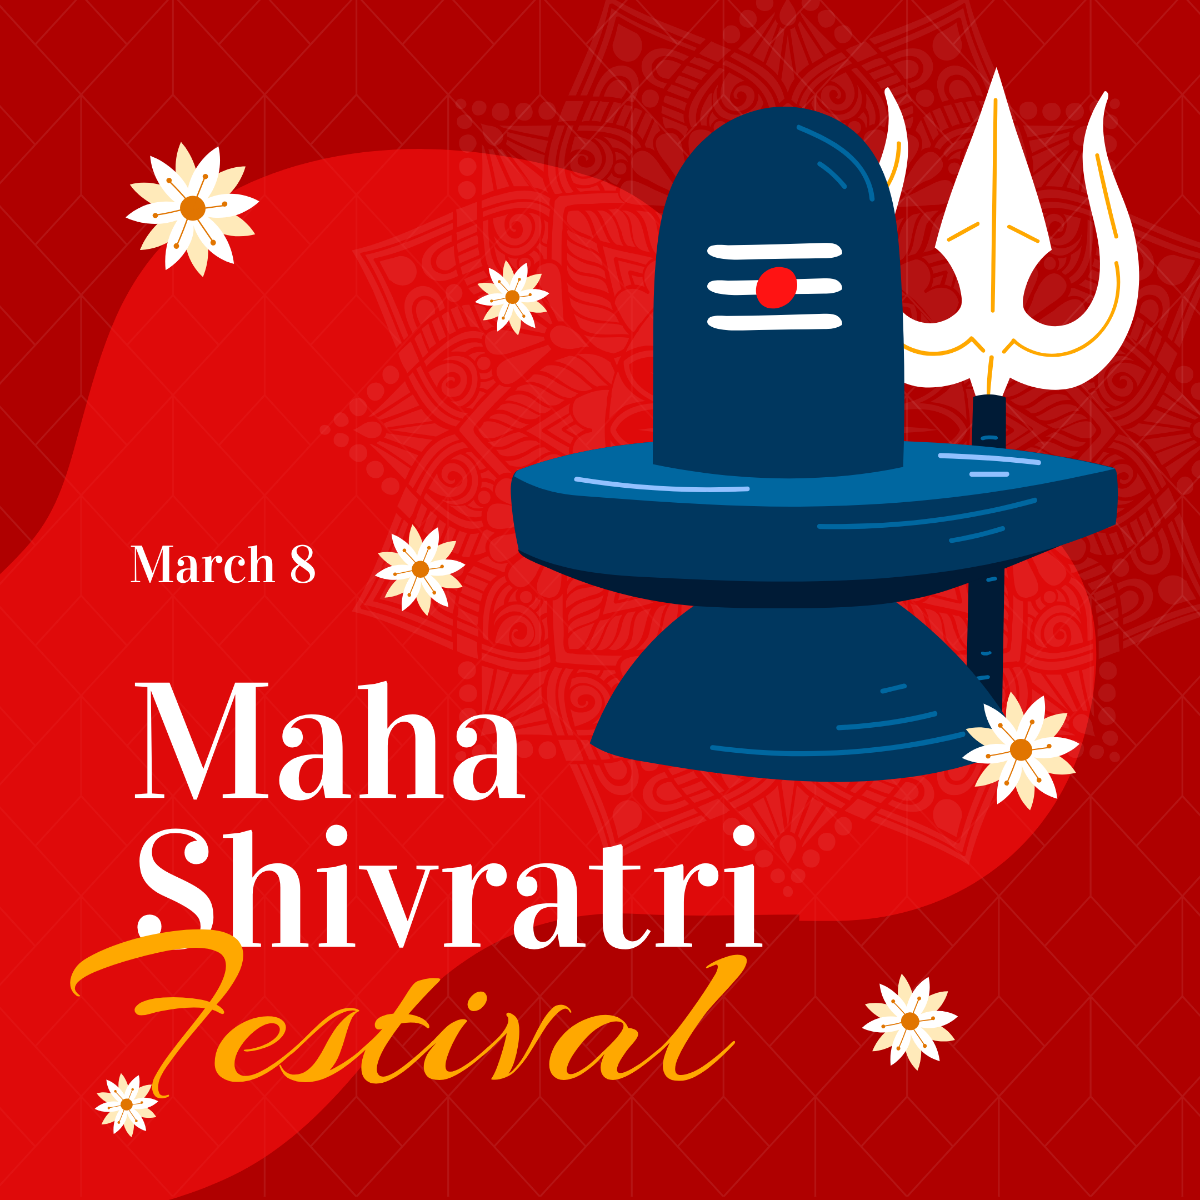 Free Maha Shivratri Festival Instagram Post Template